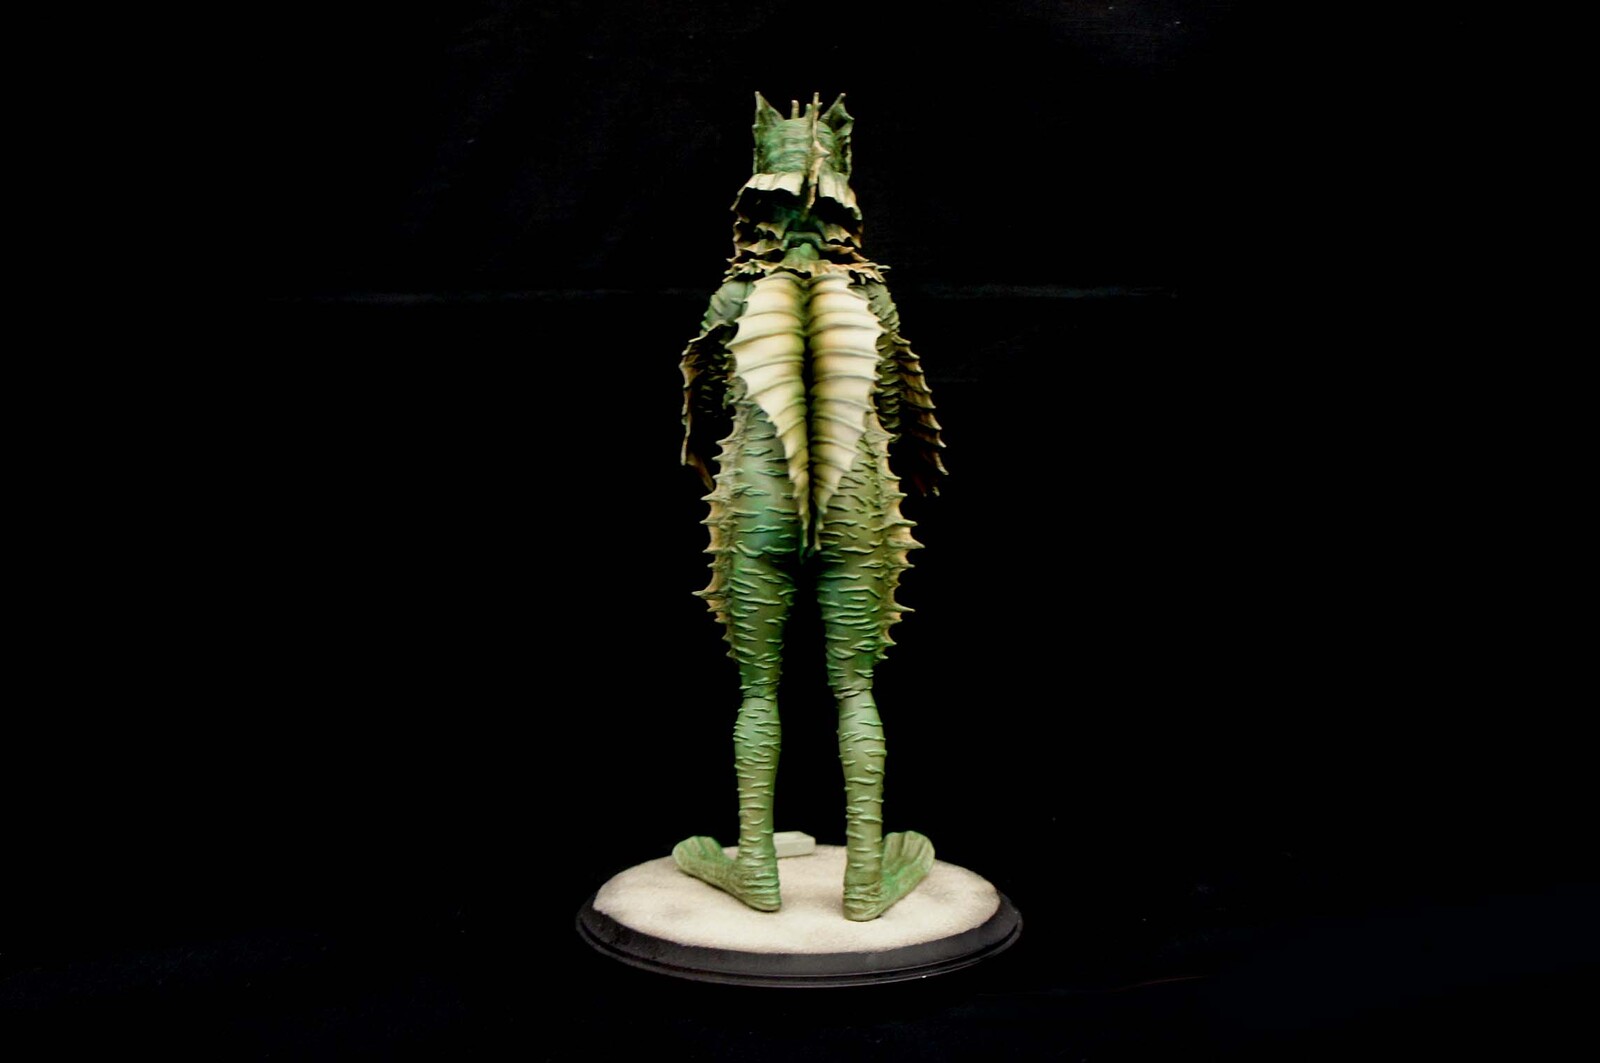 Ultra Q  deep-sea creature RAGON art statue 海底原人 ラゴン
https://www.solidart.club/